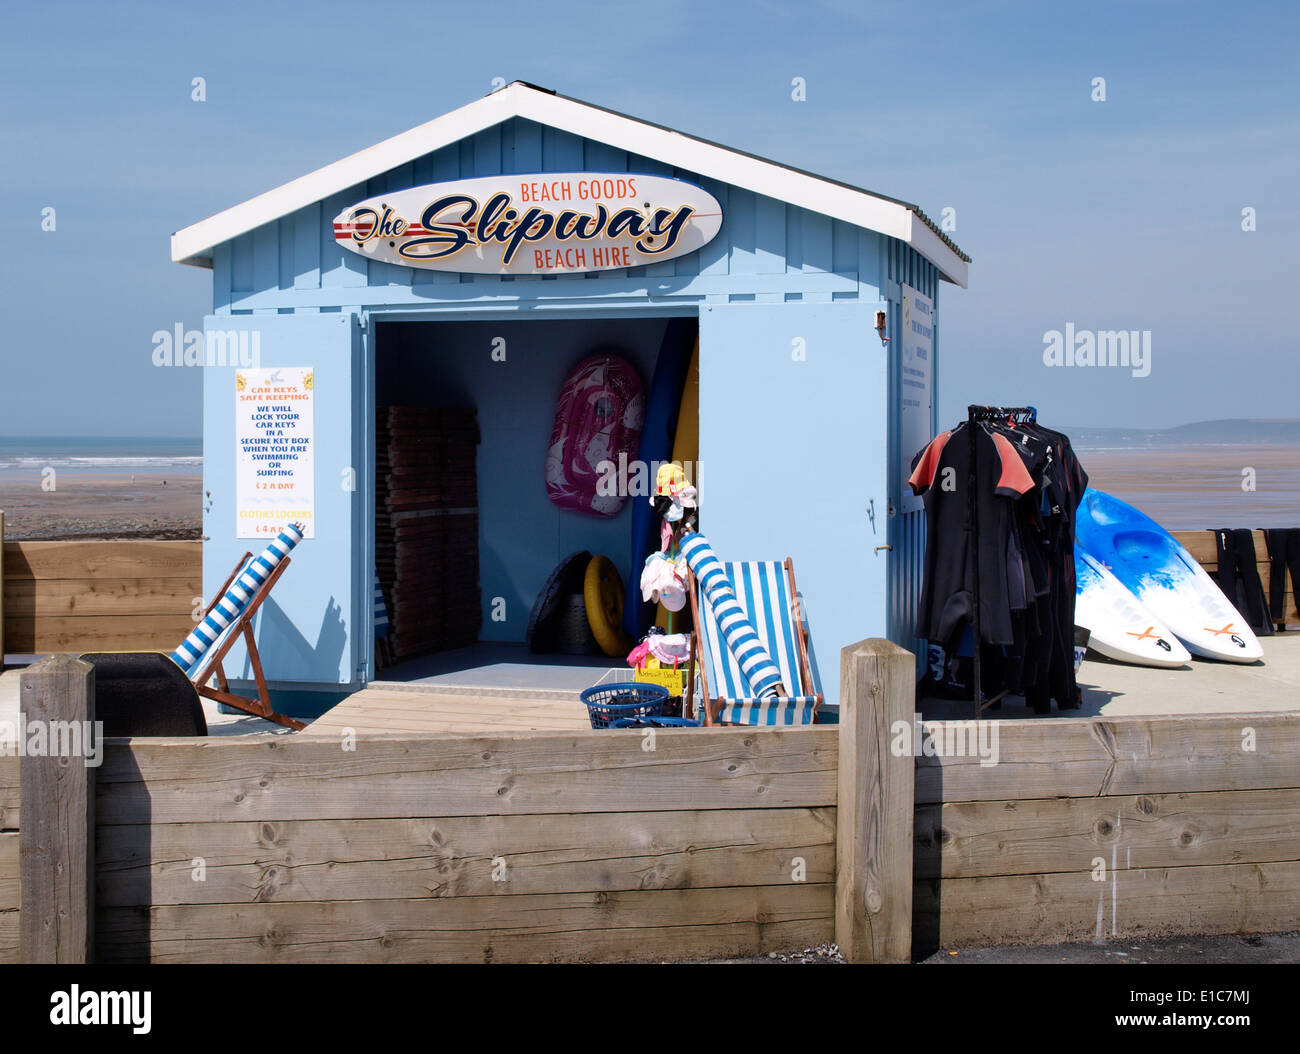 The Slipway, beach goods and beach hire, Westward Ho!, Devon, UK Stock Photo